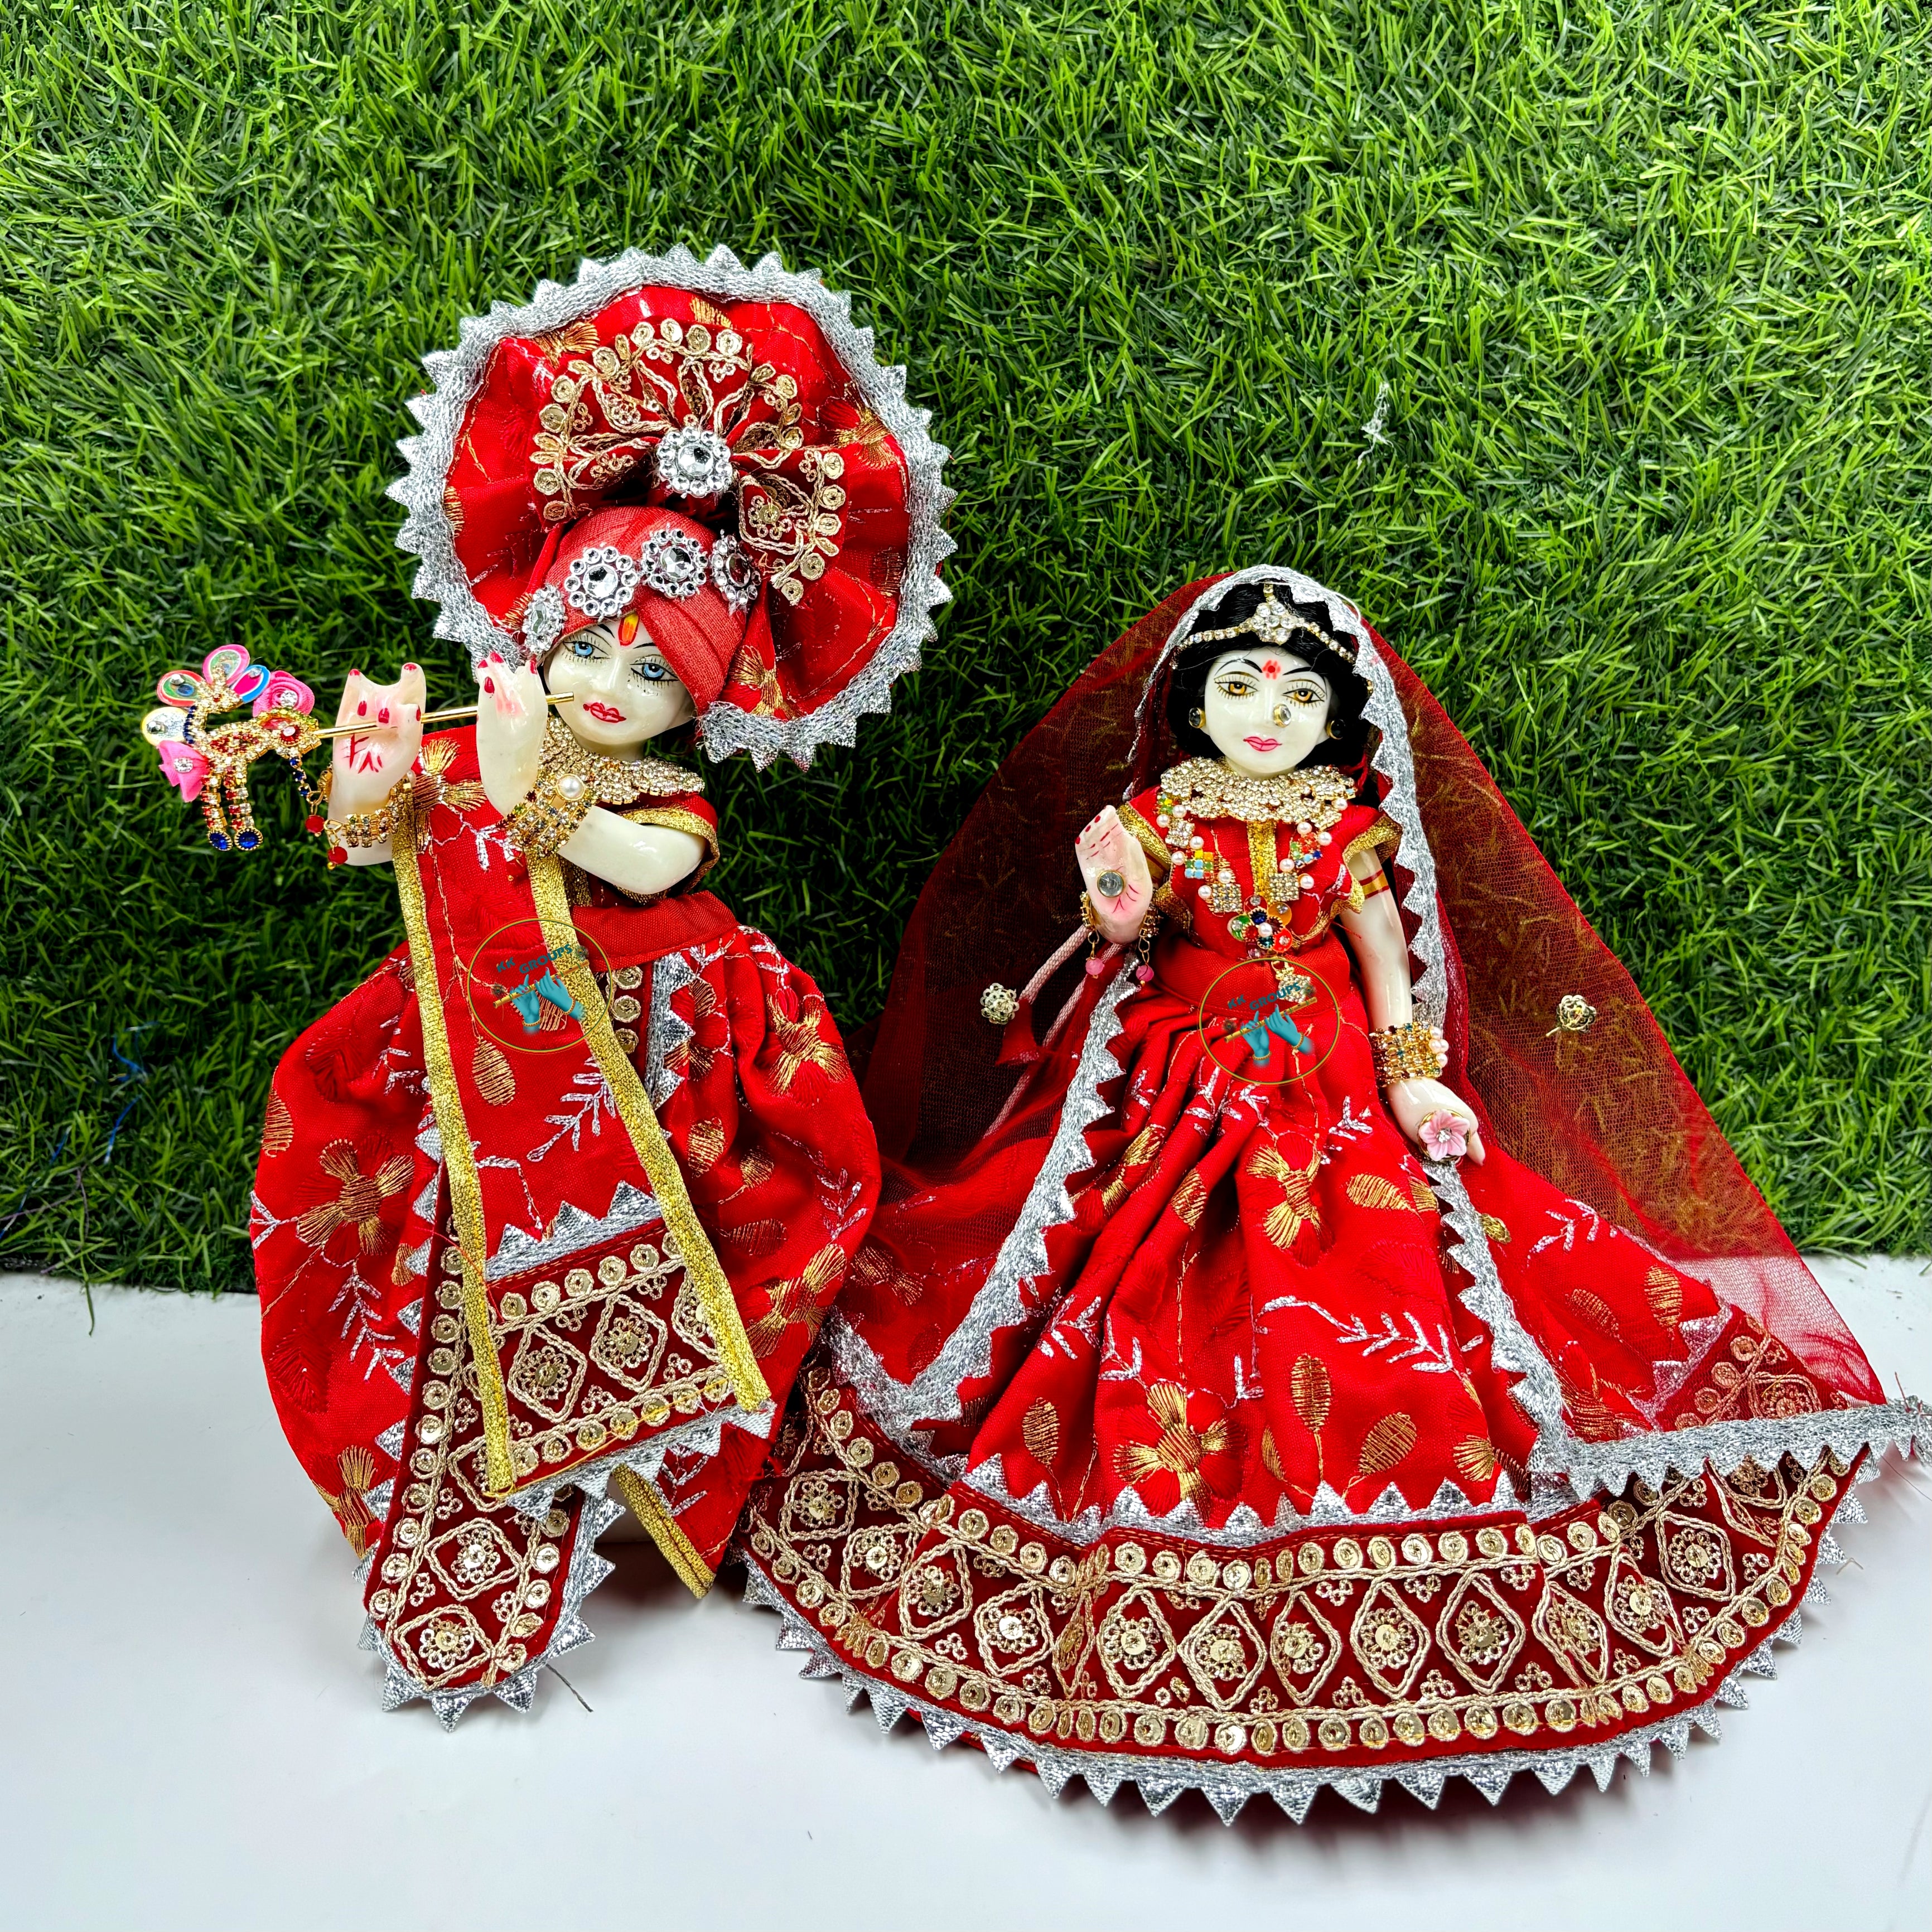 Radha Krishna Dress - for 9